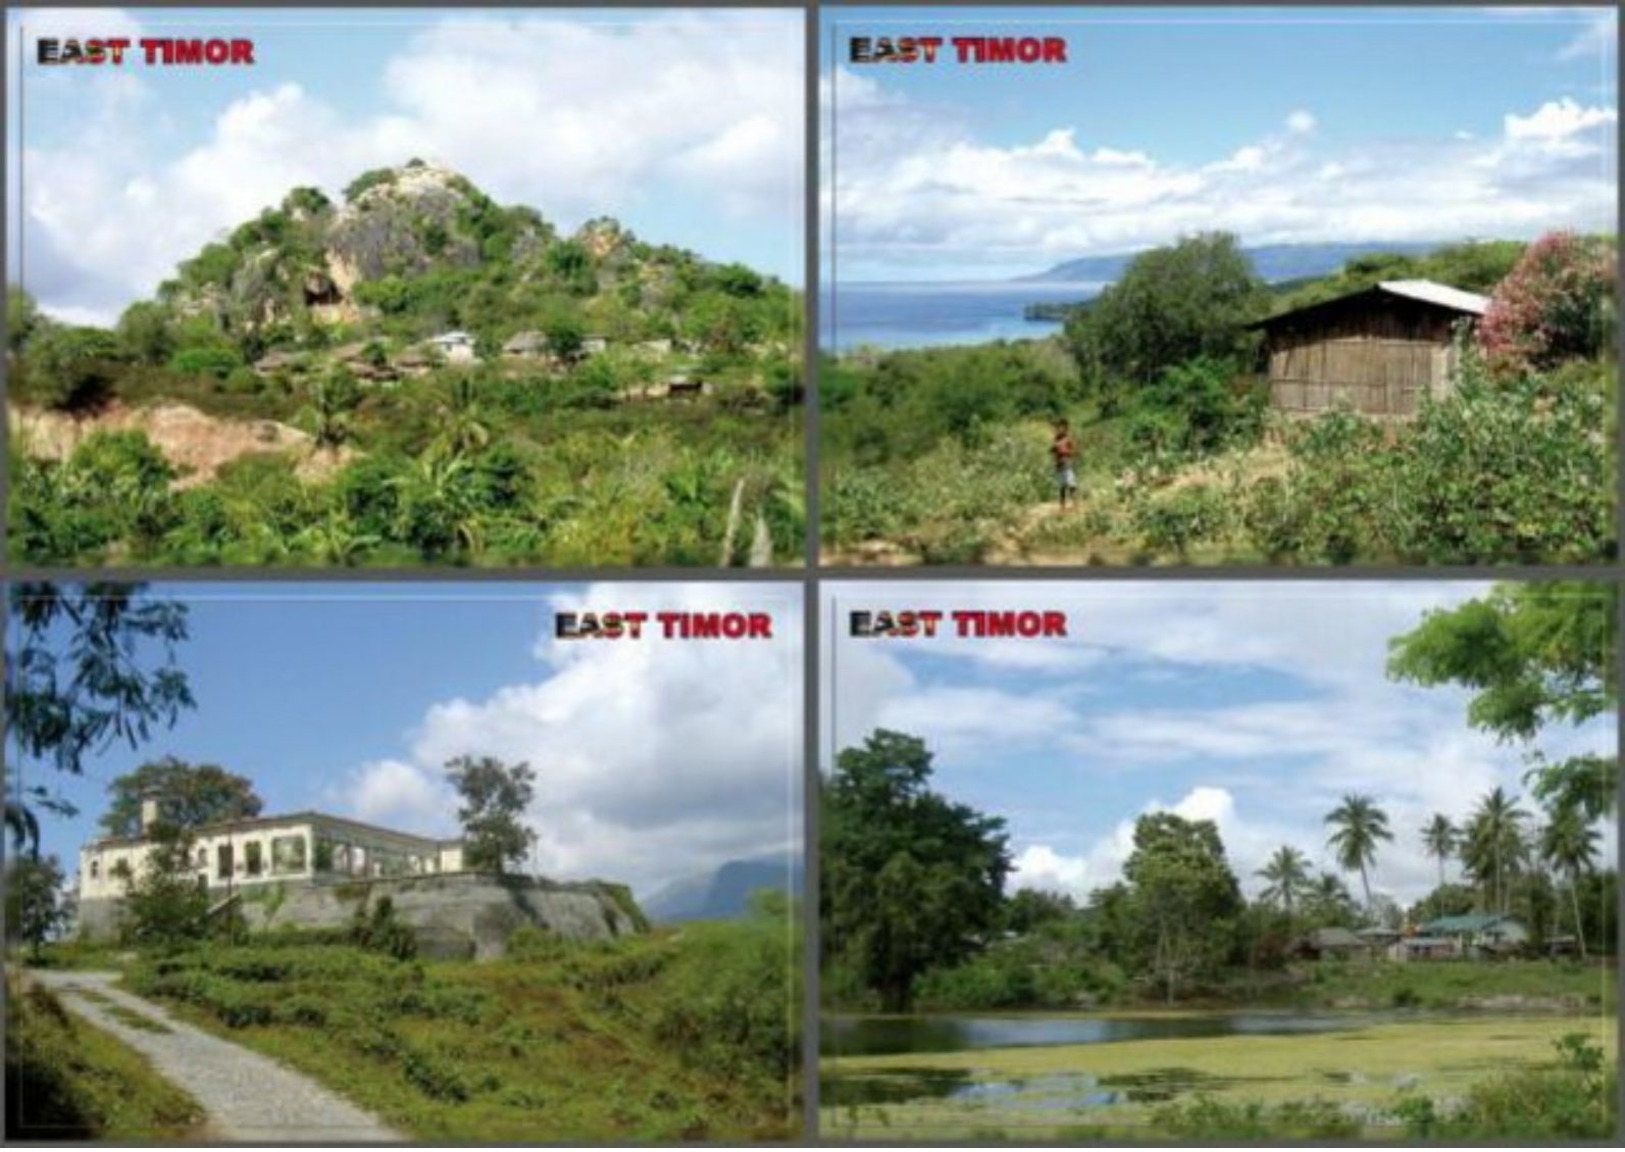 Timor East Timor Timur Timor Lorosae Lot 10 Postcards Cartes Postales Cartao Postais Asia - Dili - Timor Oriental